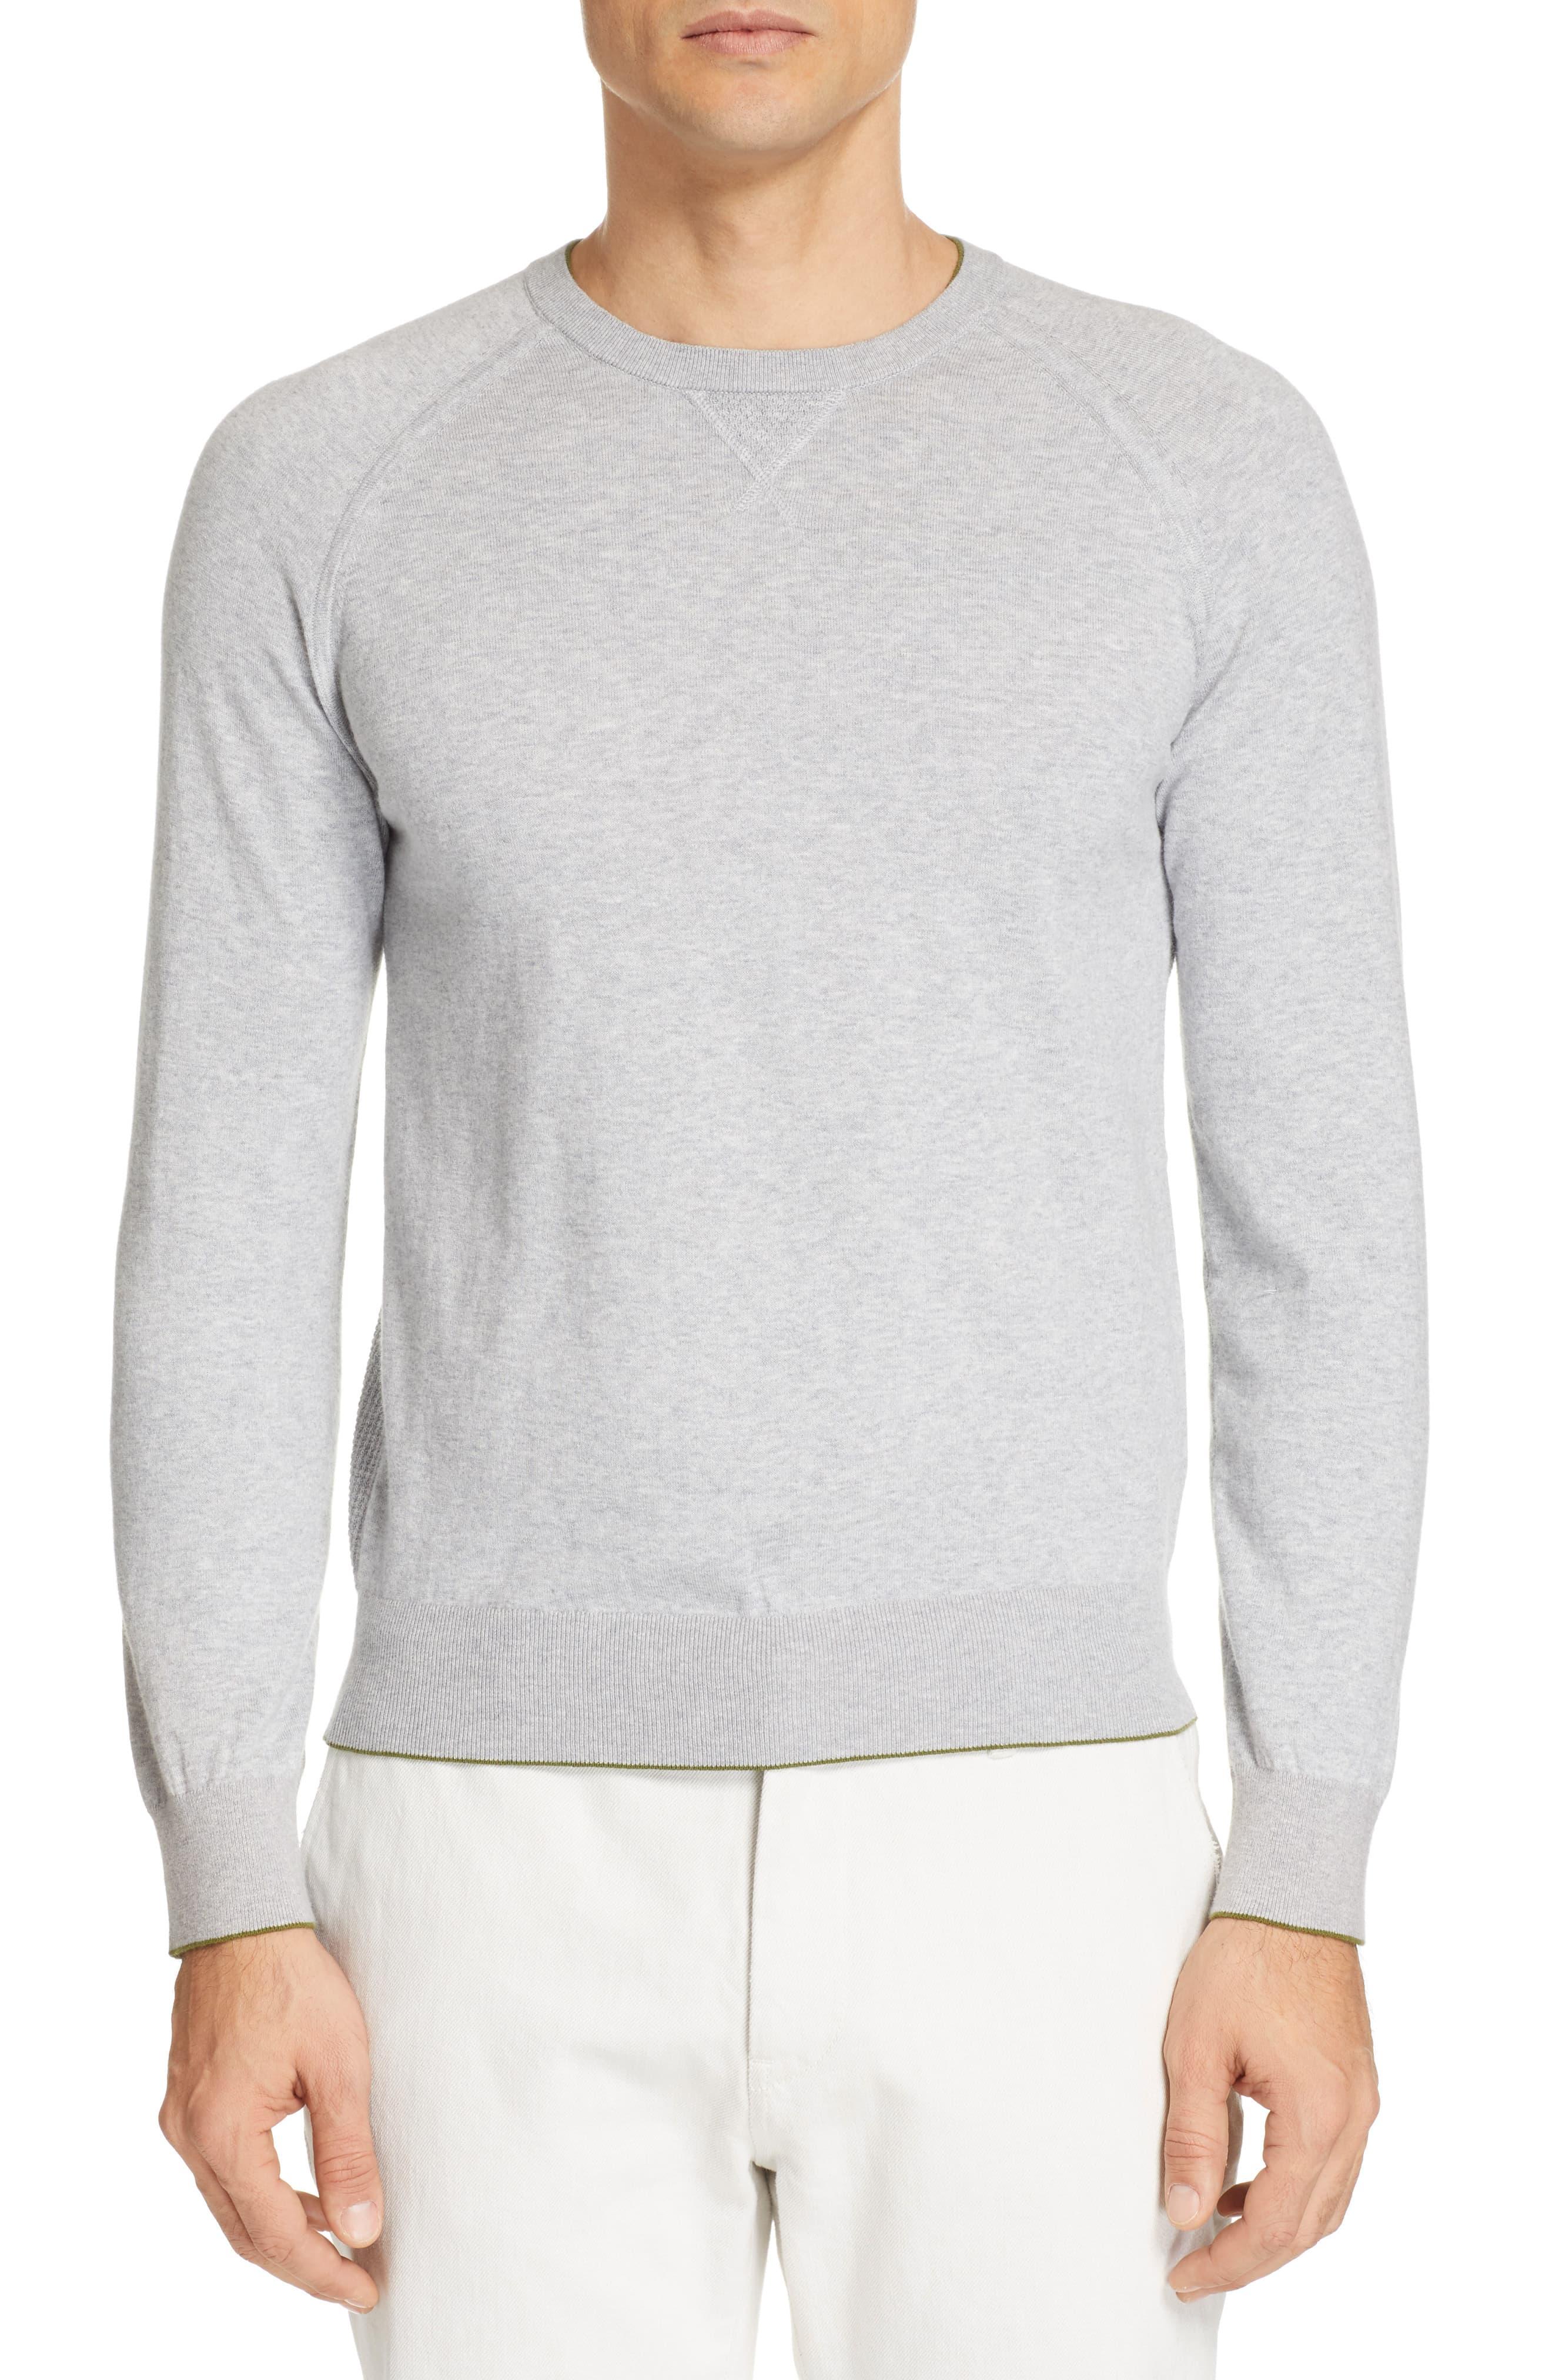 Z Zegna Cotton & Cashmere Extra Slim Fit Crewneck Sweater in Light Grey